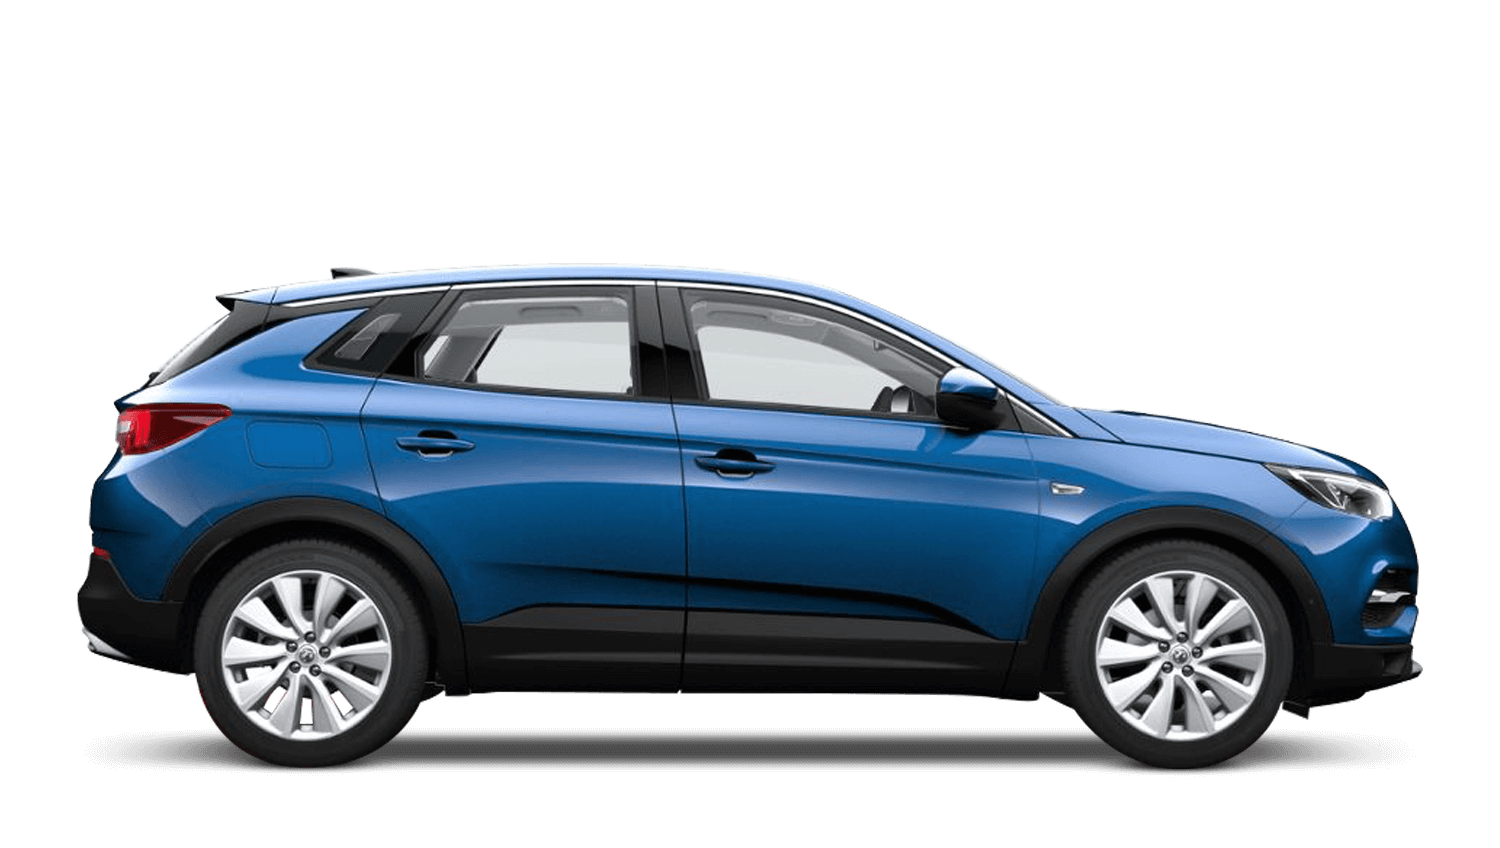 Afbeelding van K786ST, blauwe Opel Grandland X mpv